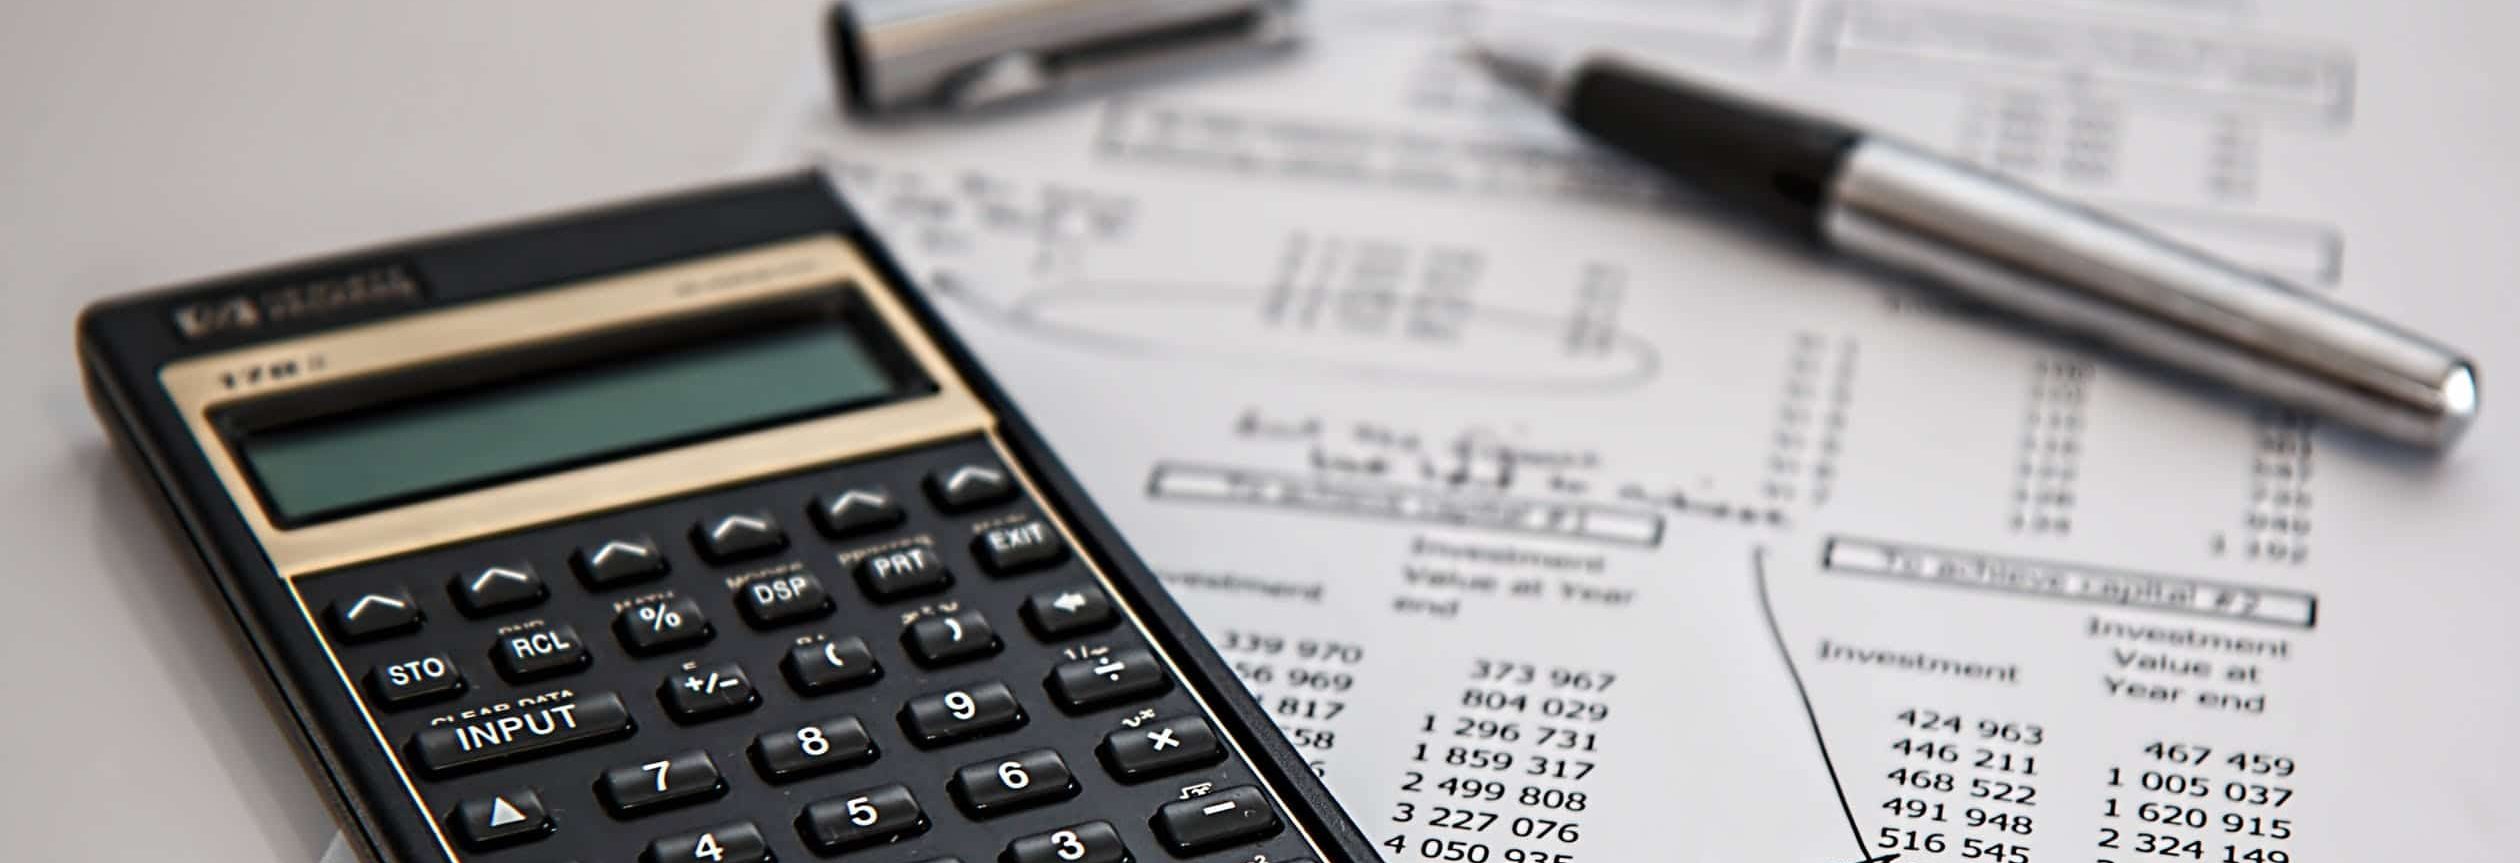 Calculator Calculation Insurance Finance 53621 E1518127863596